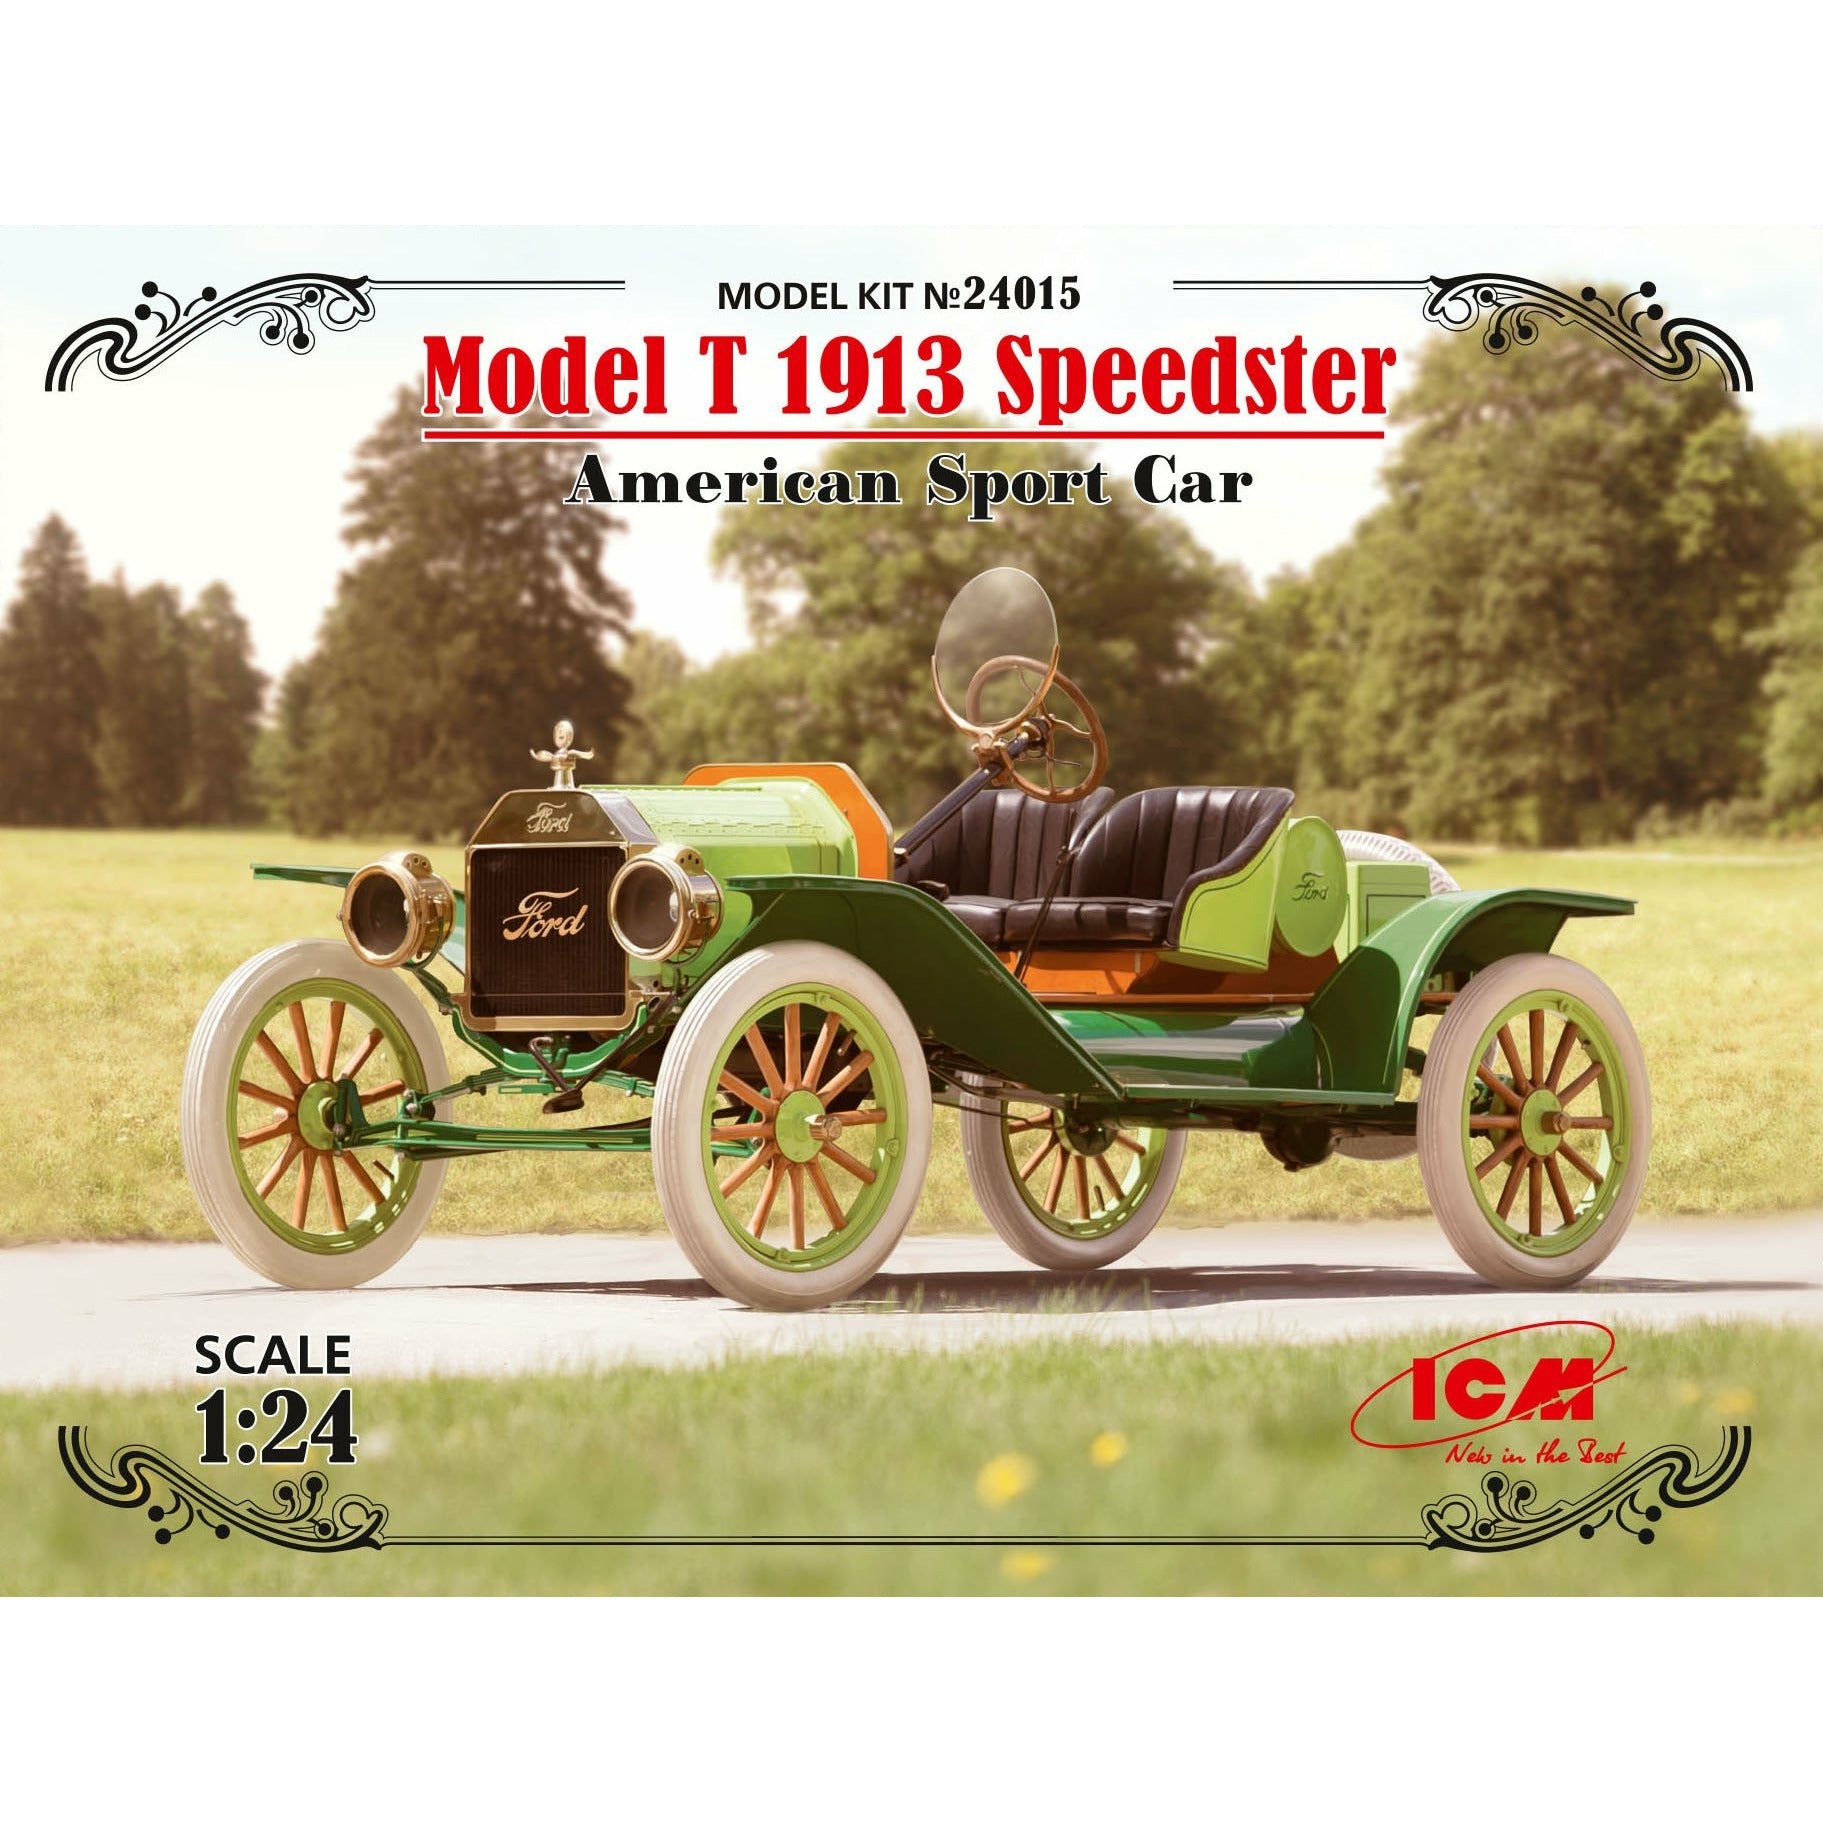 Model T 1913 Speedster American Sport Car 1/24 #24015 by ICM